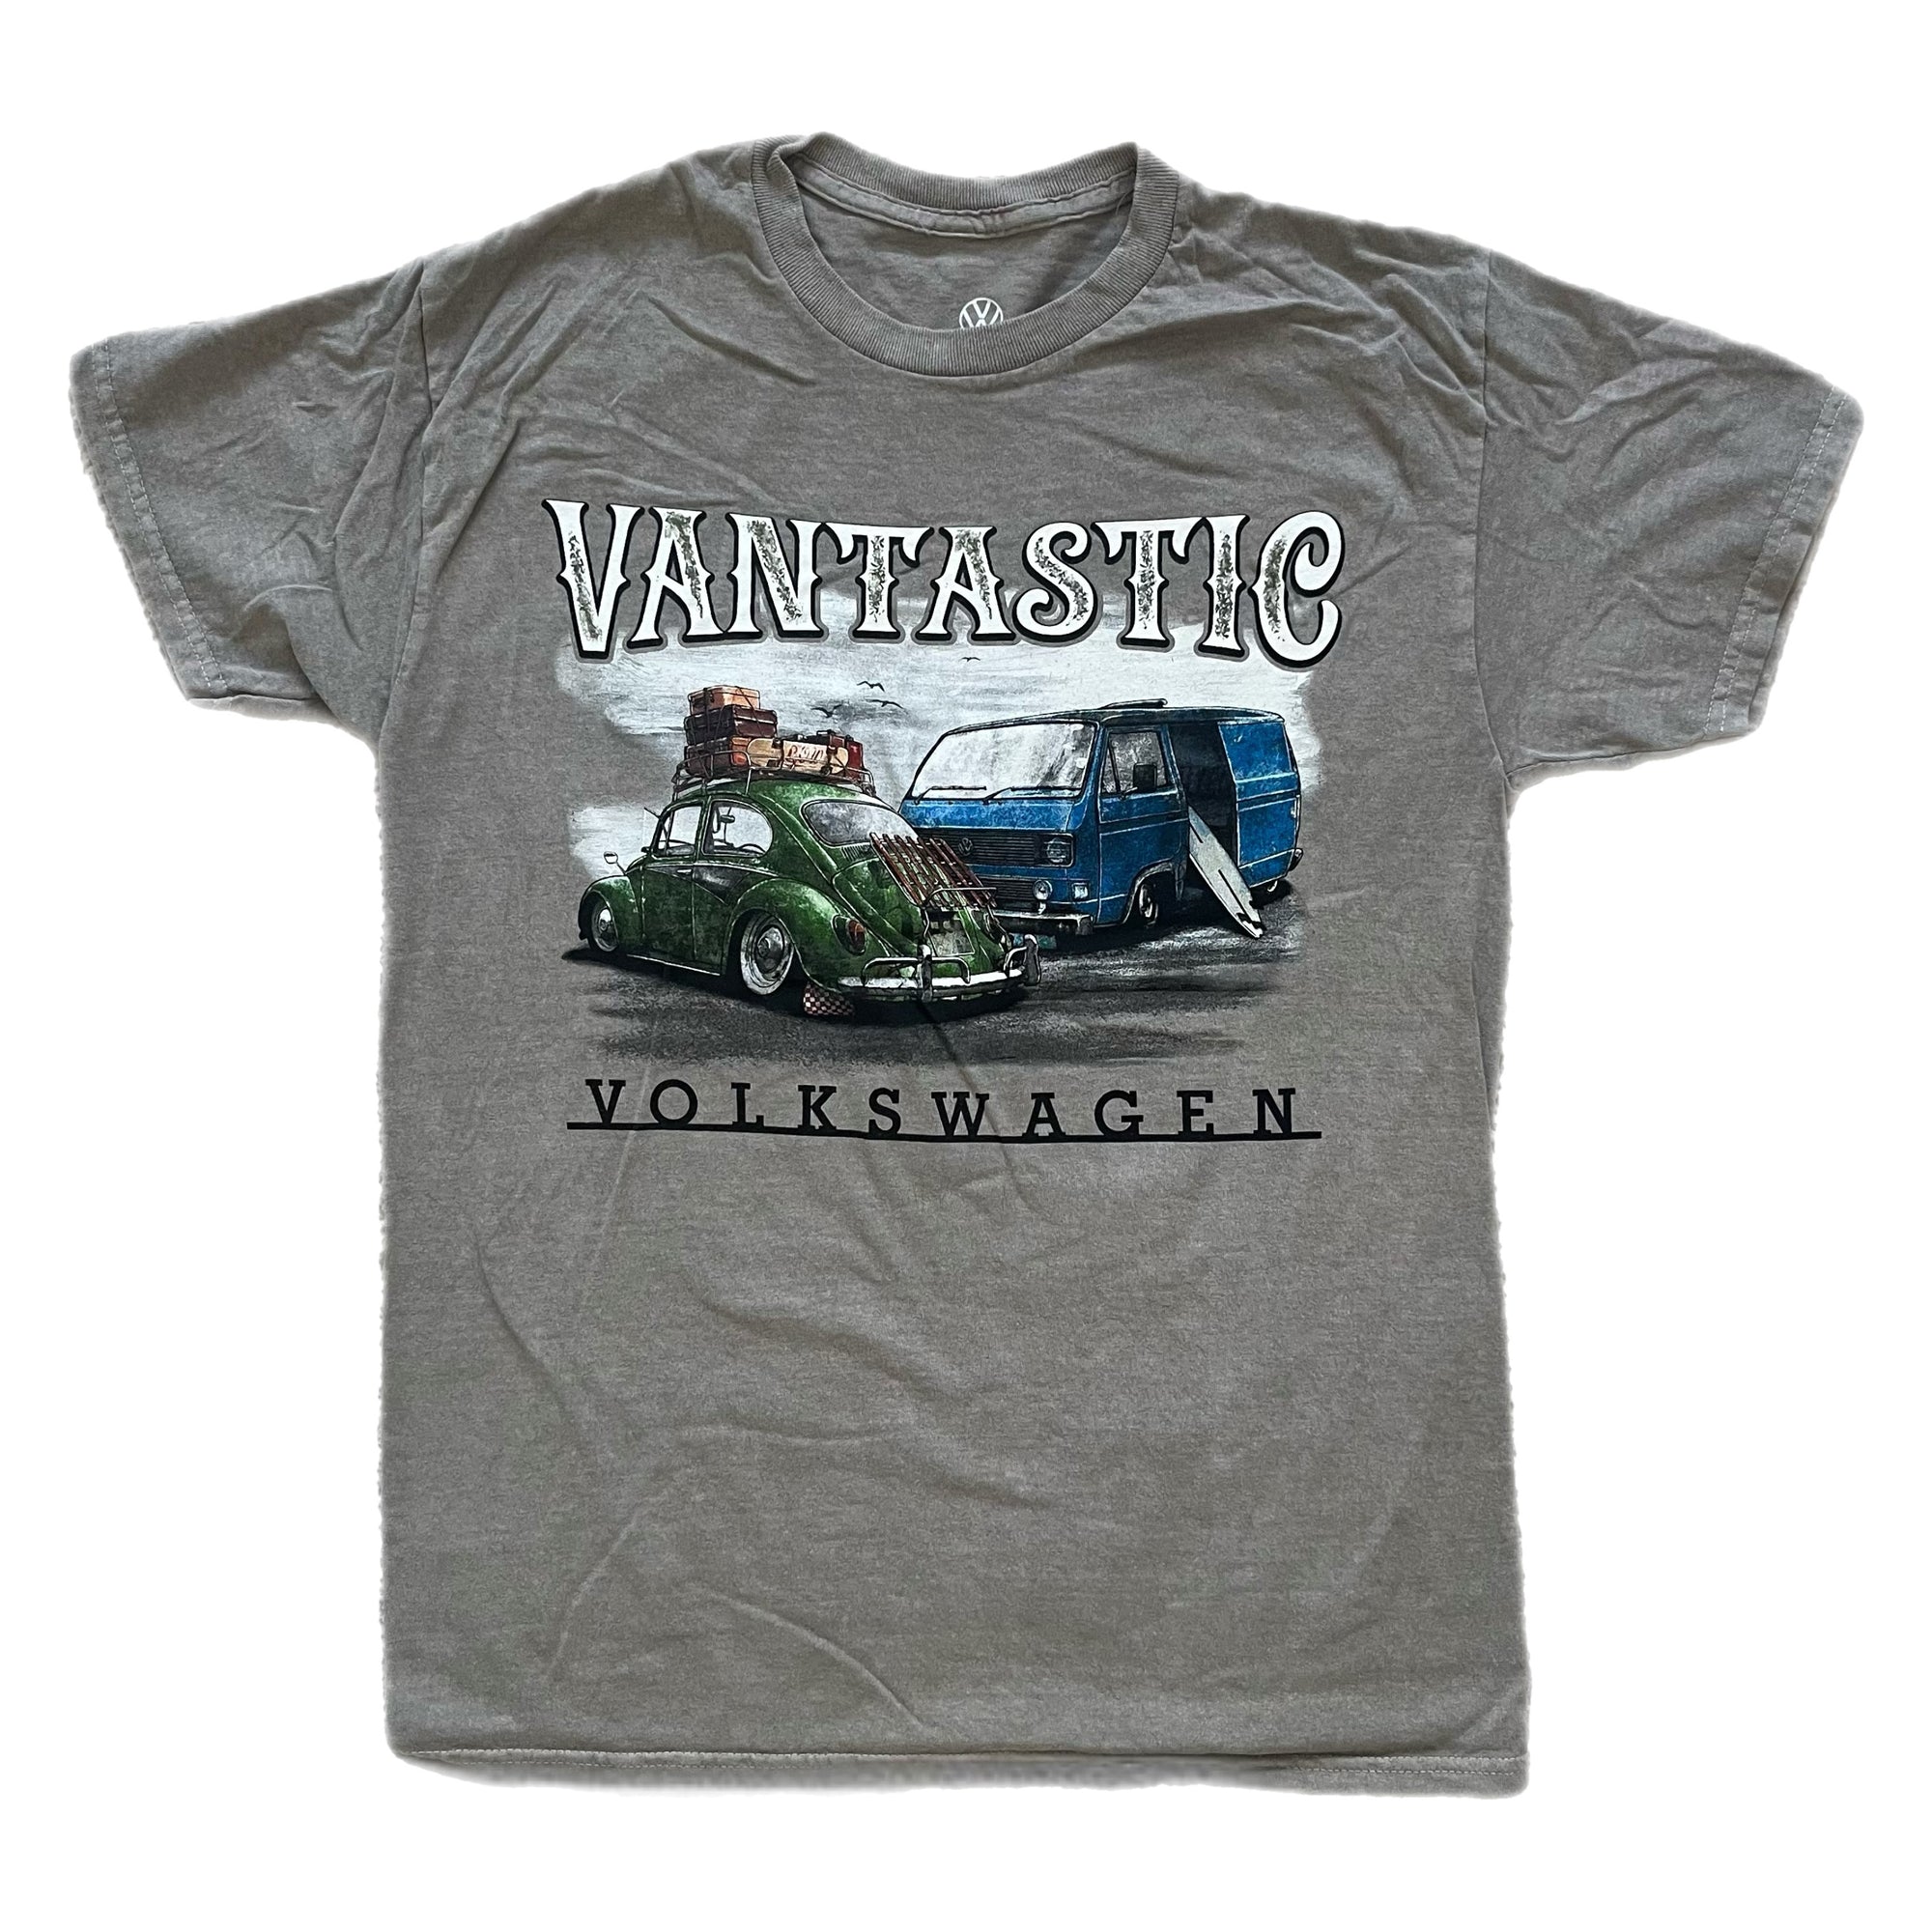 VW "Crantock" T-Shirt - Taupe Surf Wash